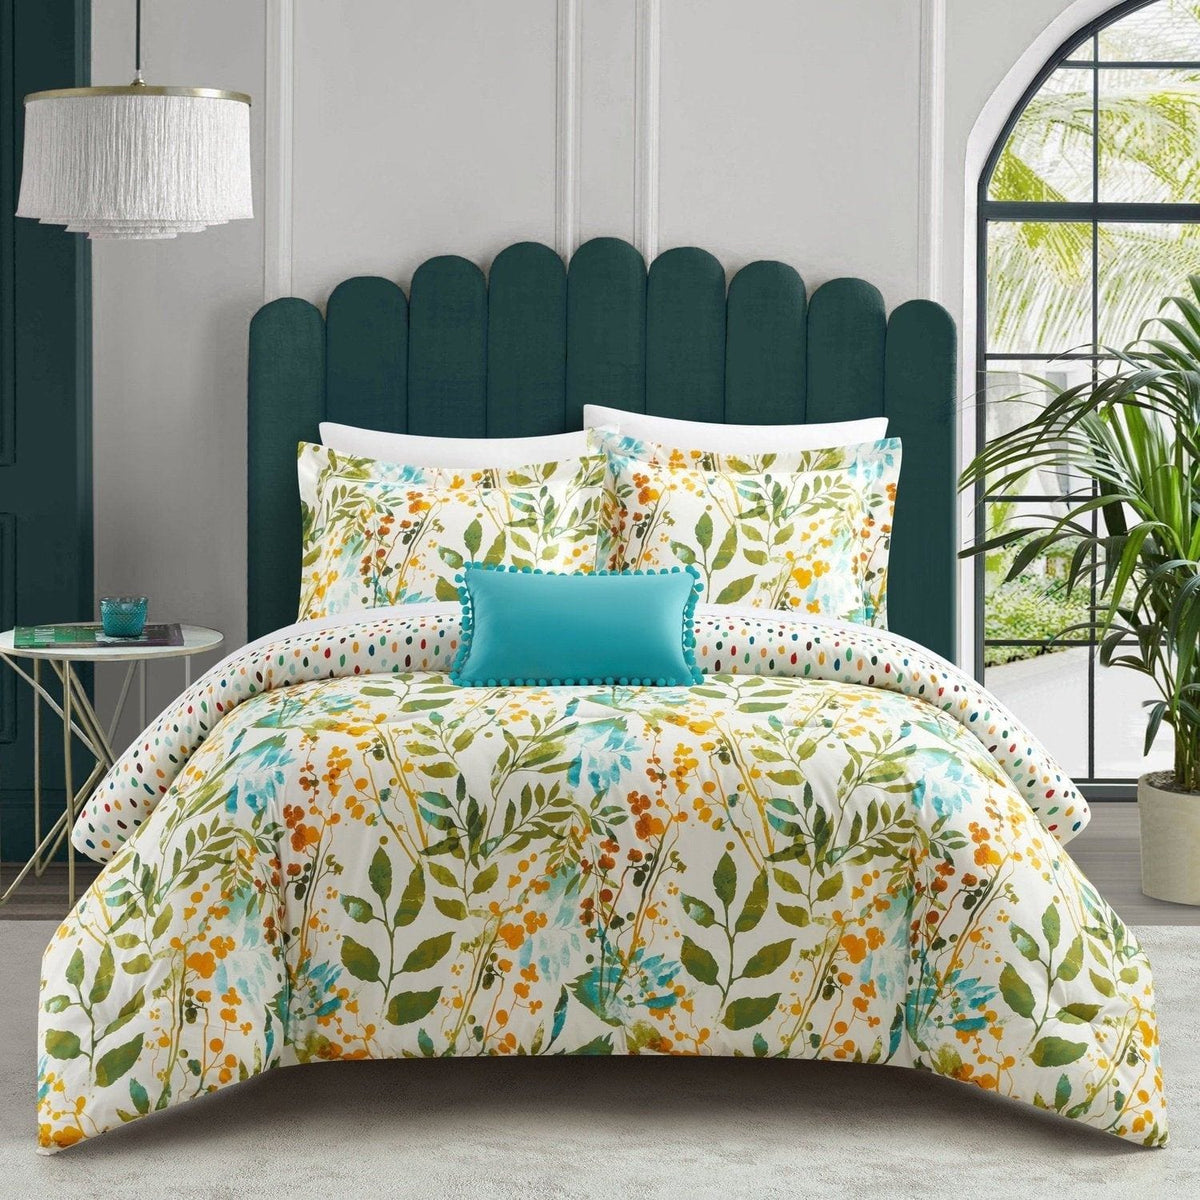 Chic Home Blaire 4 Piece Reversible Floral Print Comforter Set Bedding